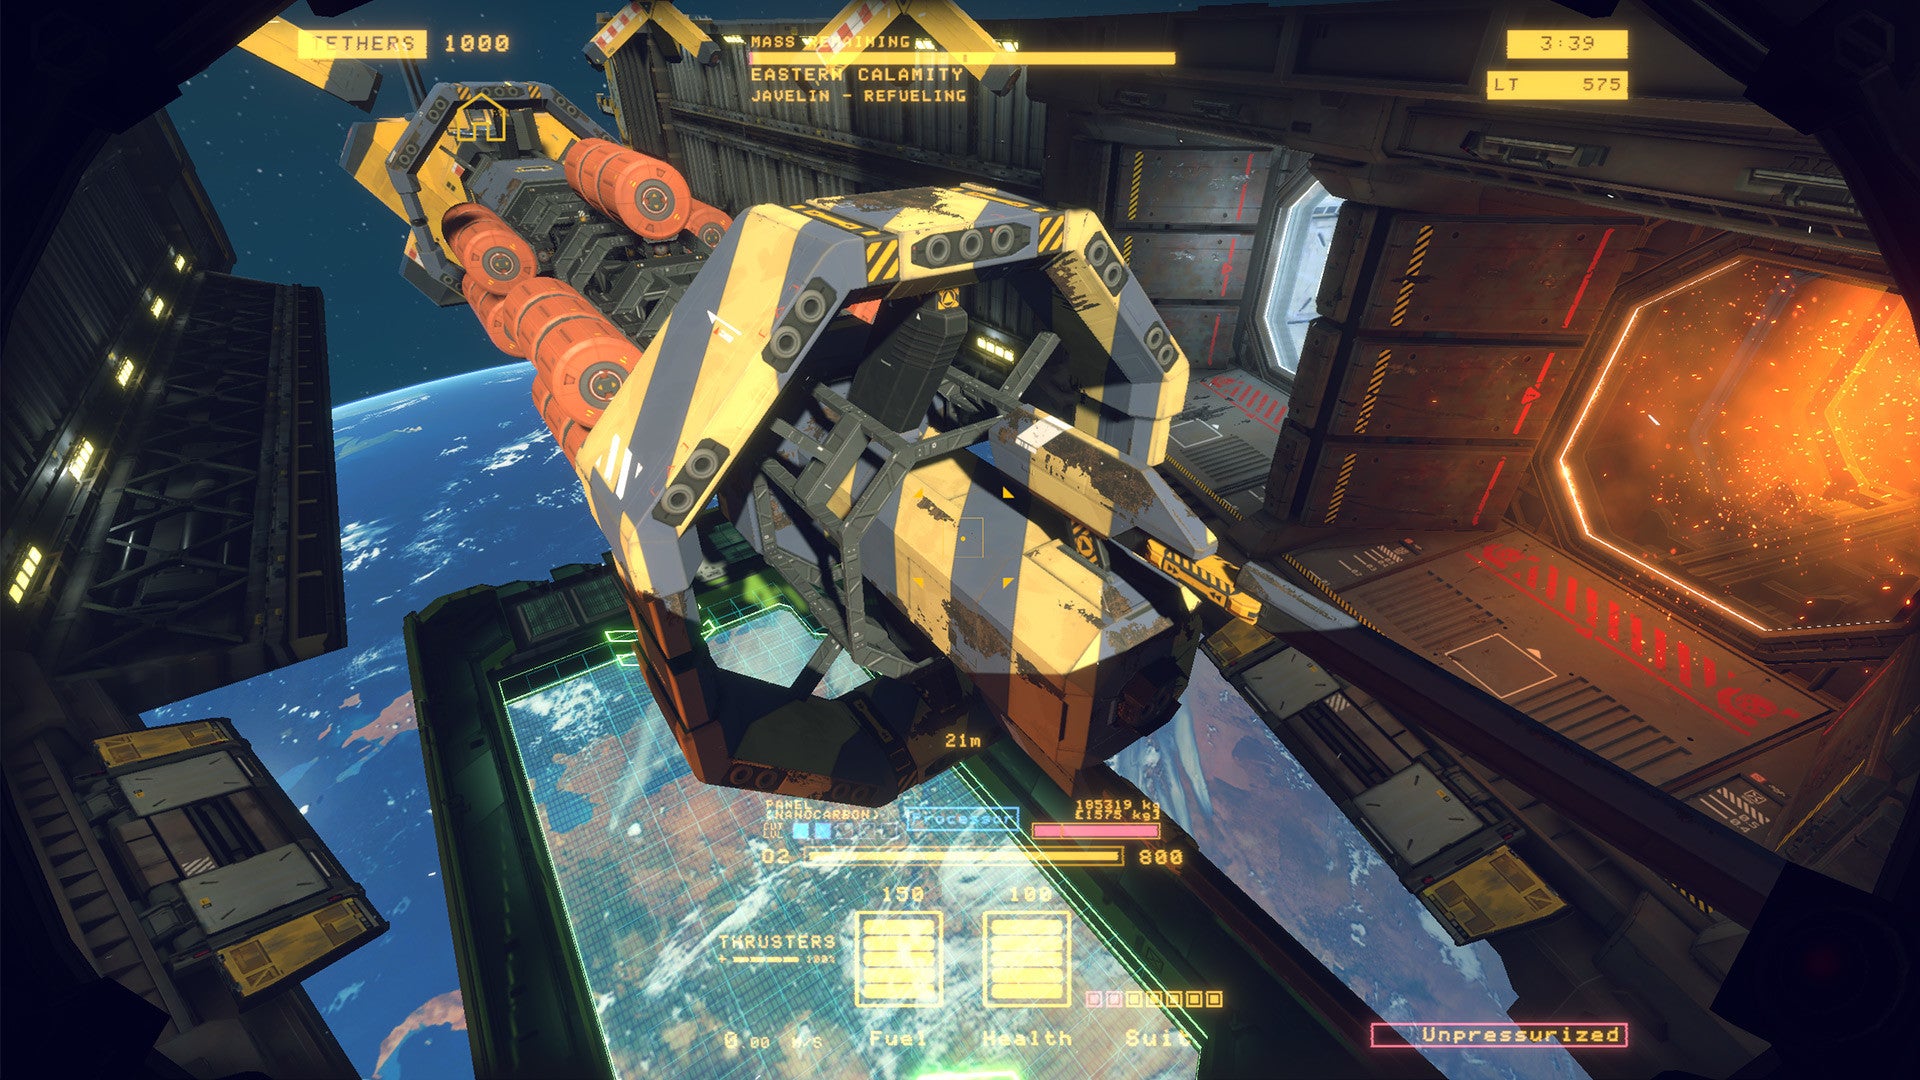 A big spaceship sat in a salvage dock in a Hardspace: Shipbreaker screenshot.